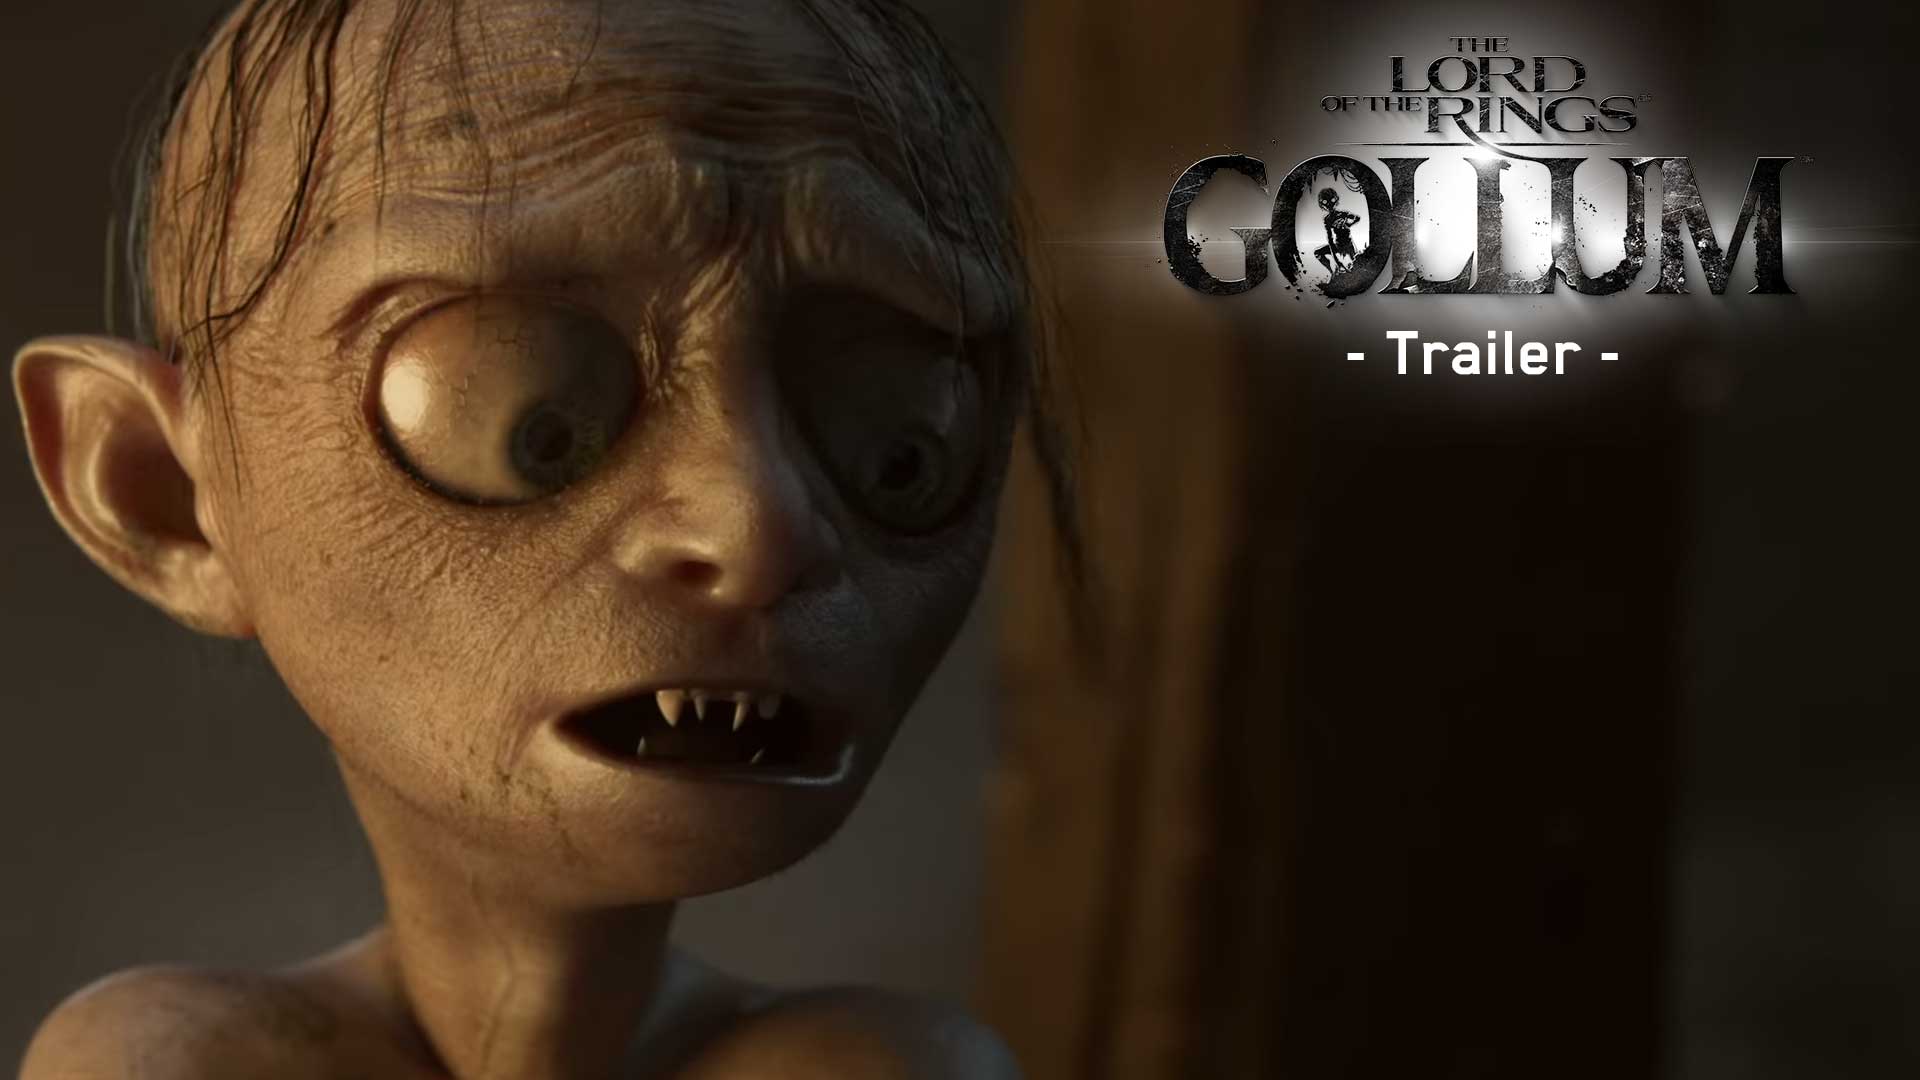 gollum trailer game awards